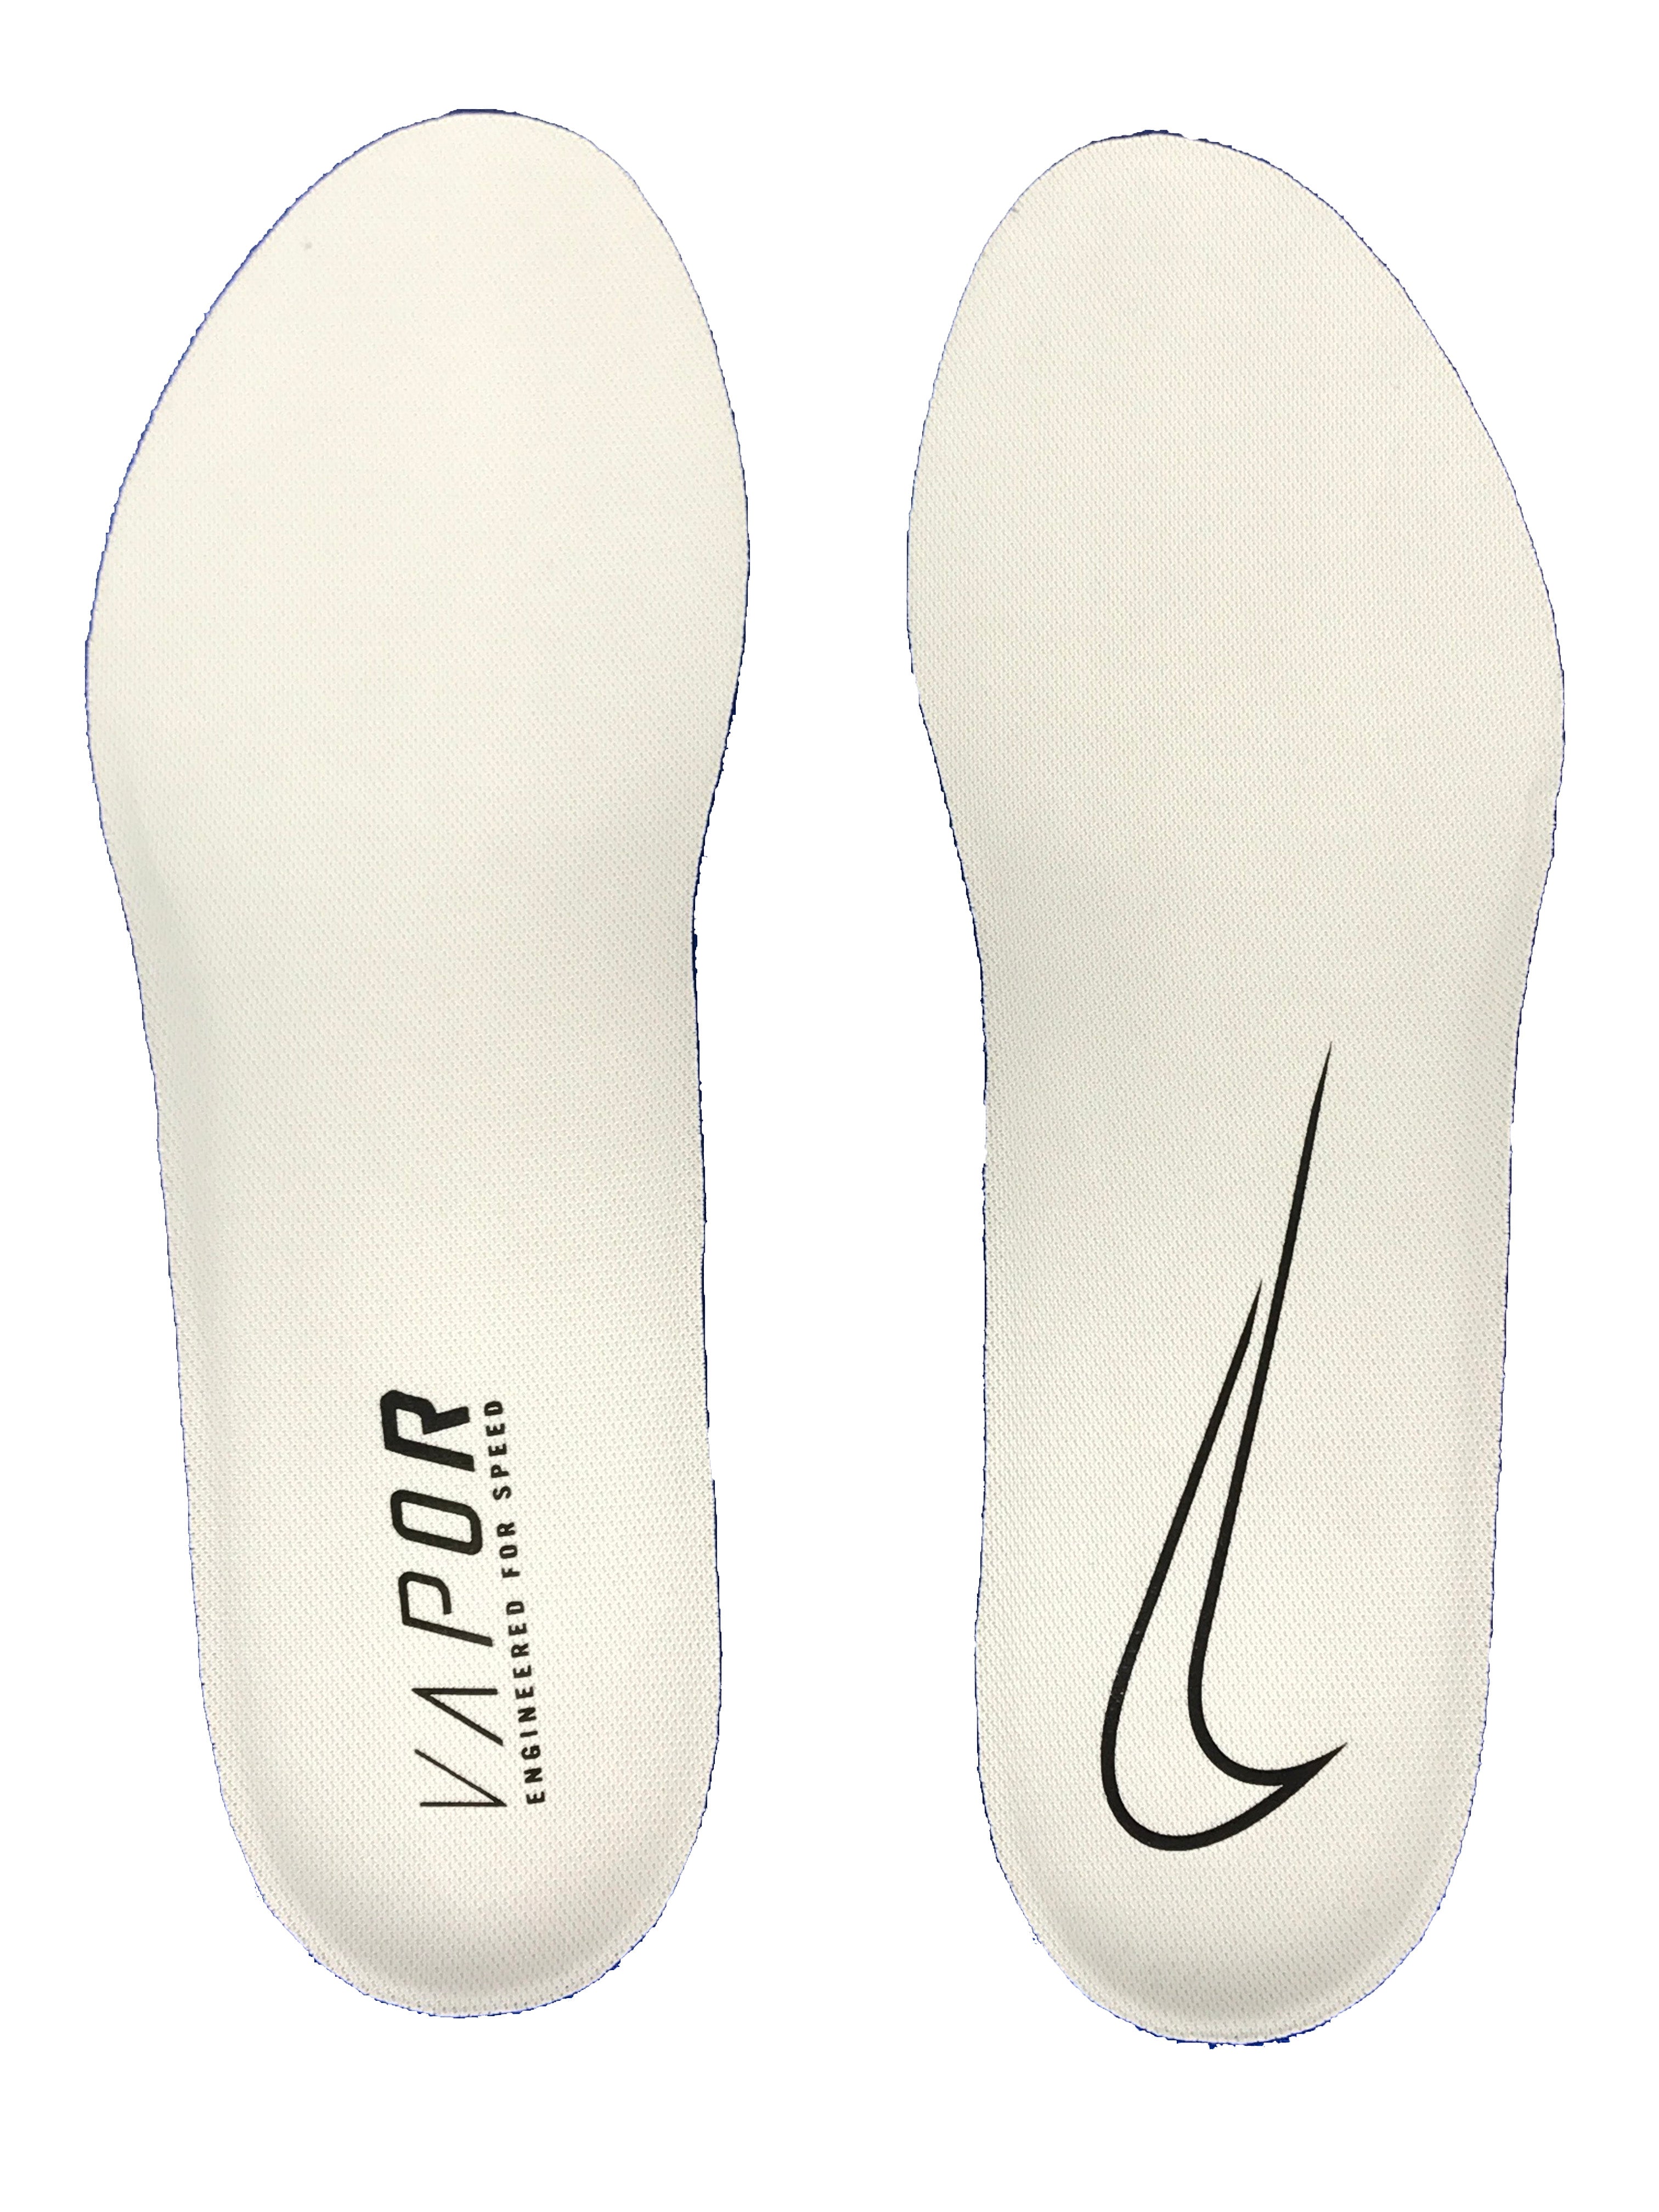 Nike Vapor White Insoles Men's Size 15